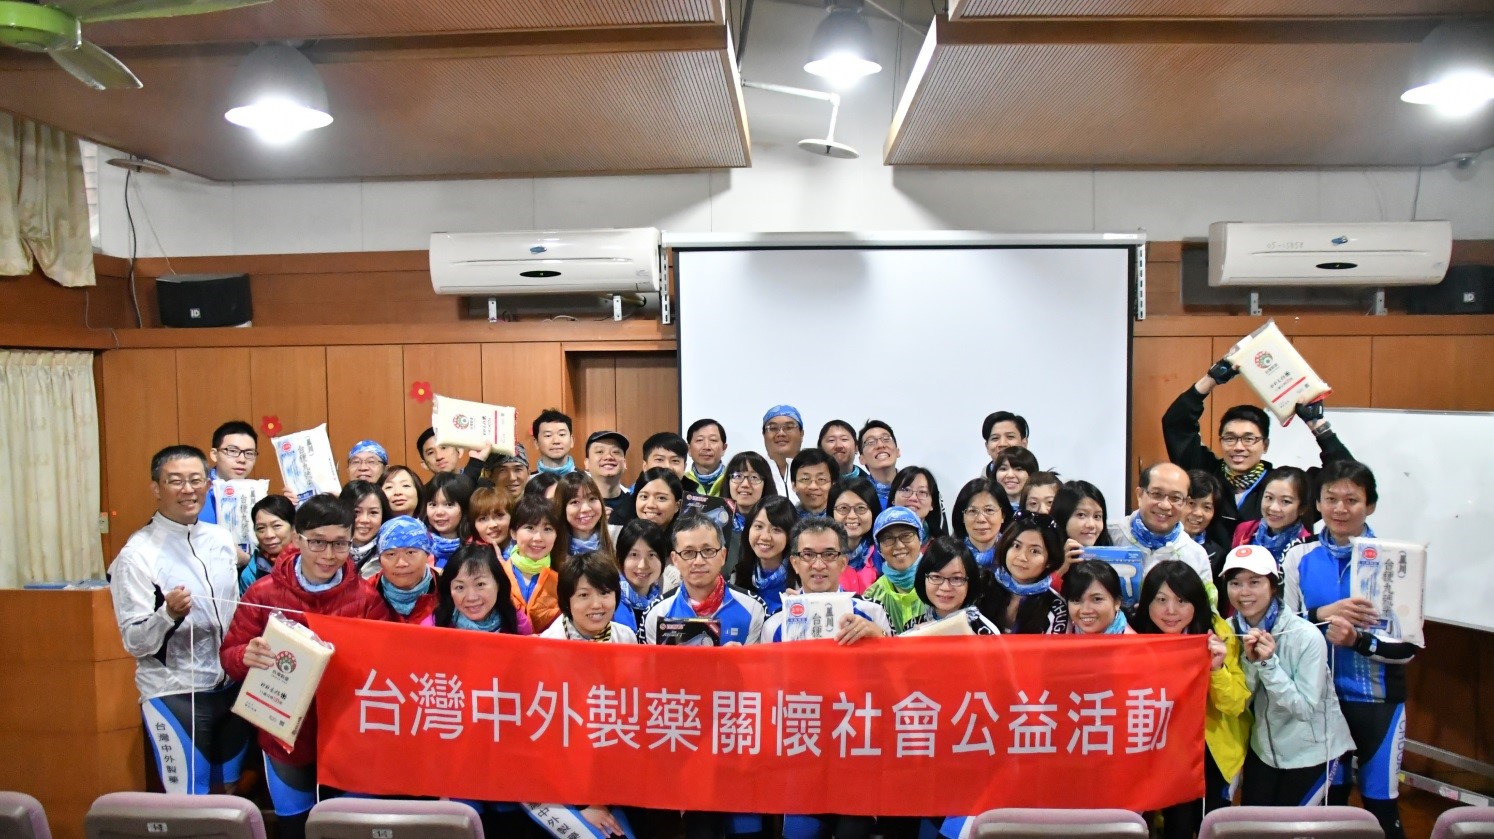 Chugai Pharma Taiwan implements charity event